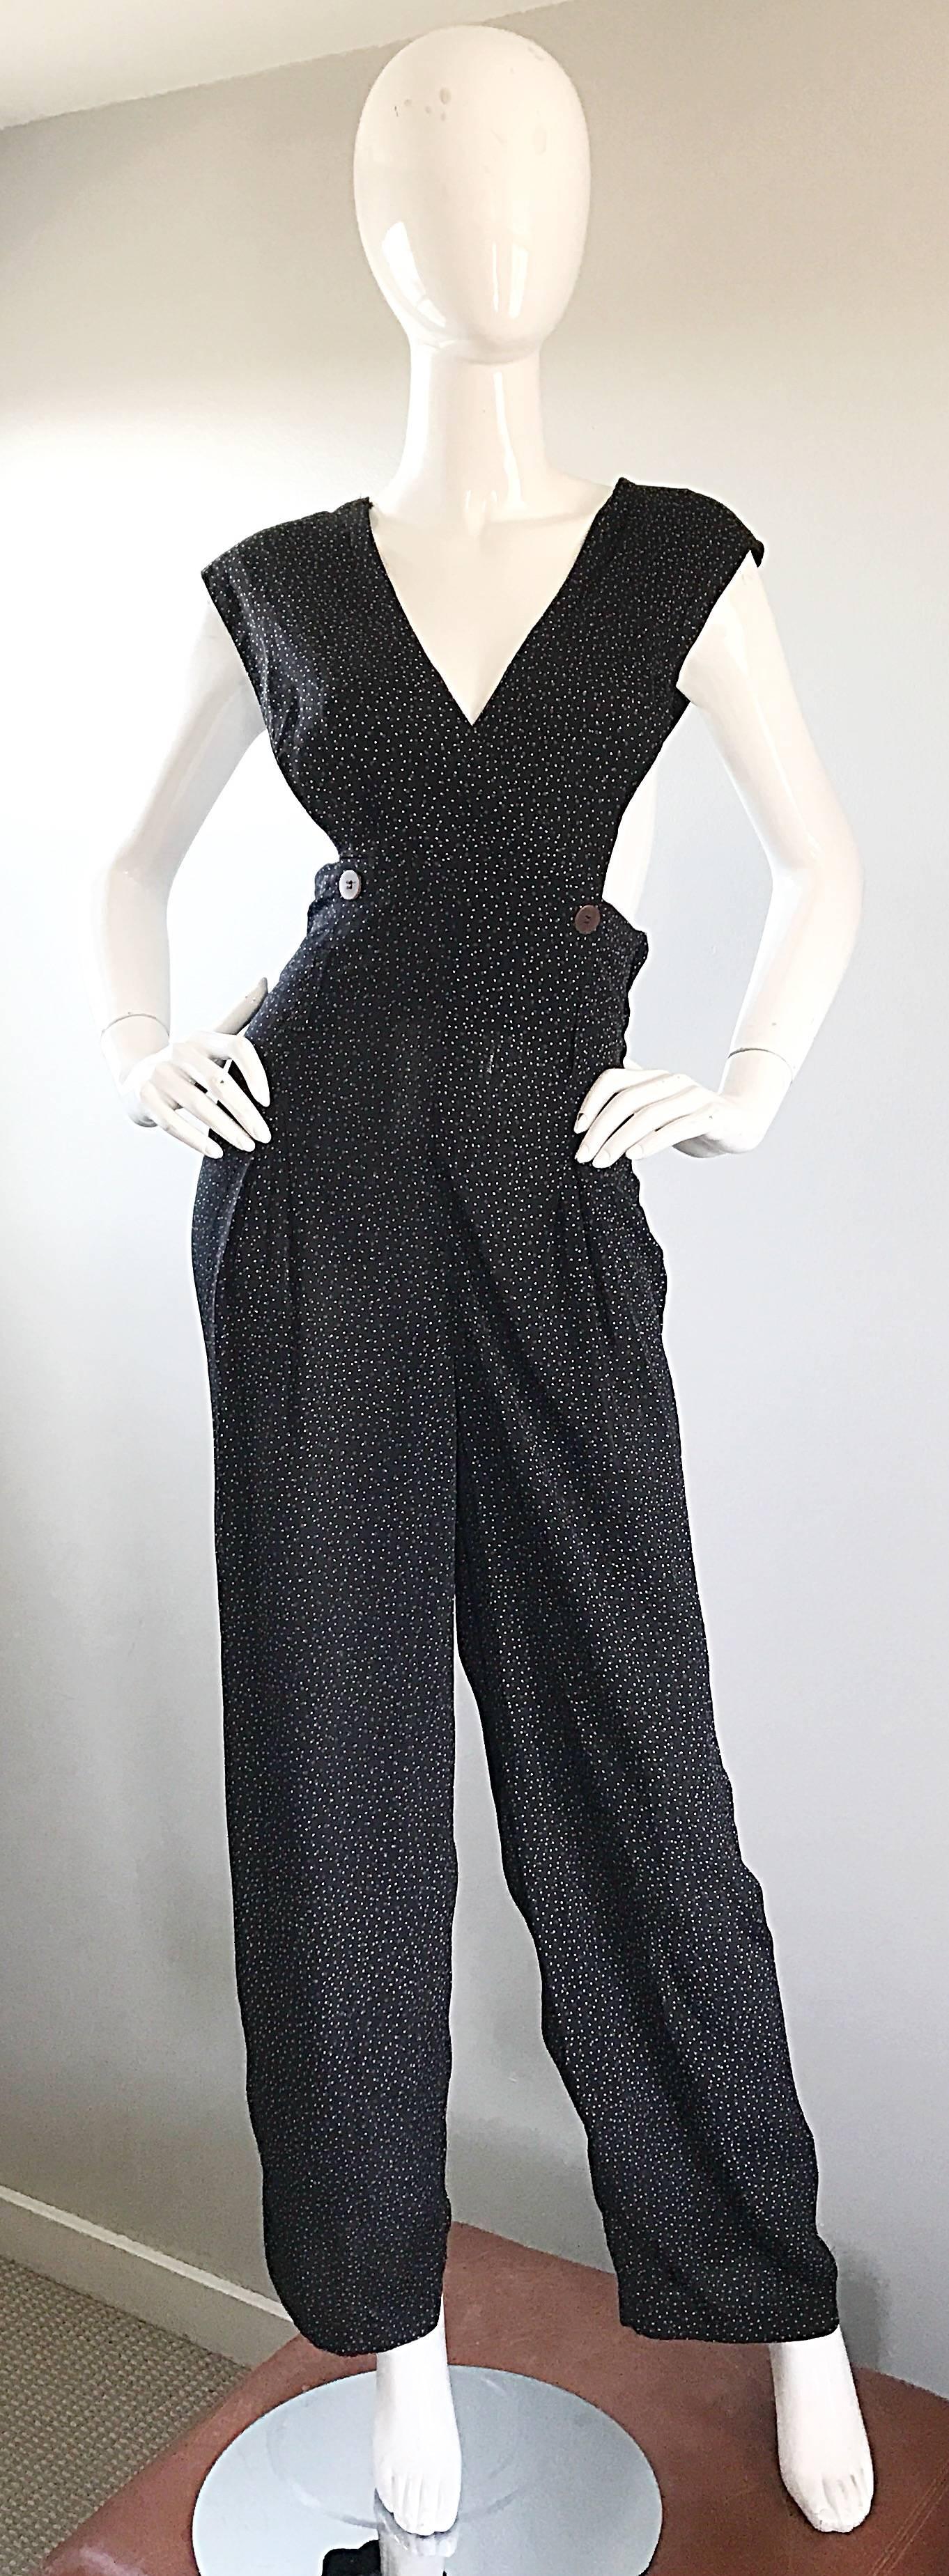 Avant Garde Vintage Shelli Segal 1990s Black + Brown + White Polka Dot Jumpsuit For Sale 3